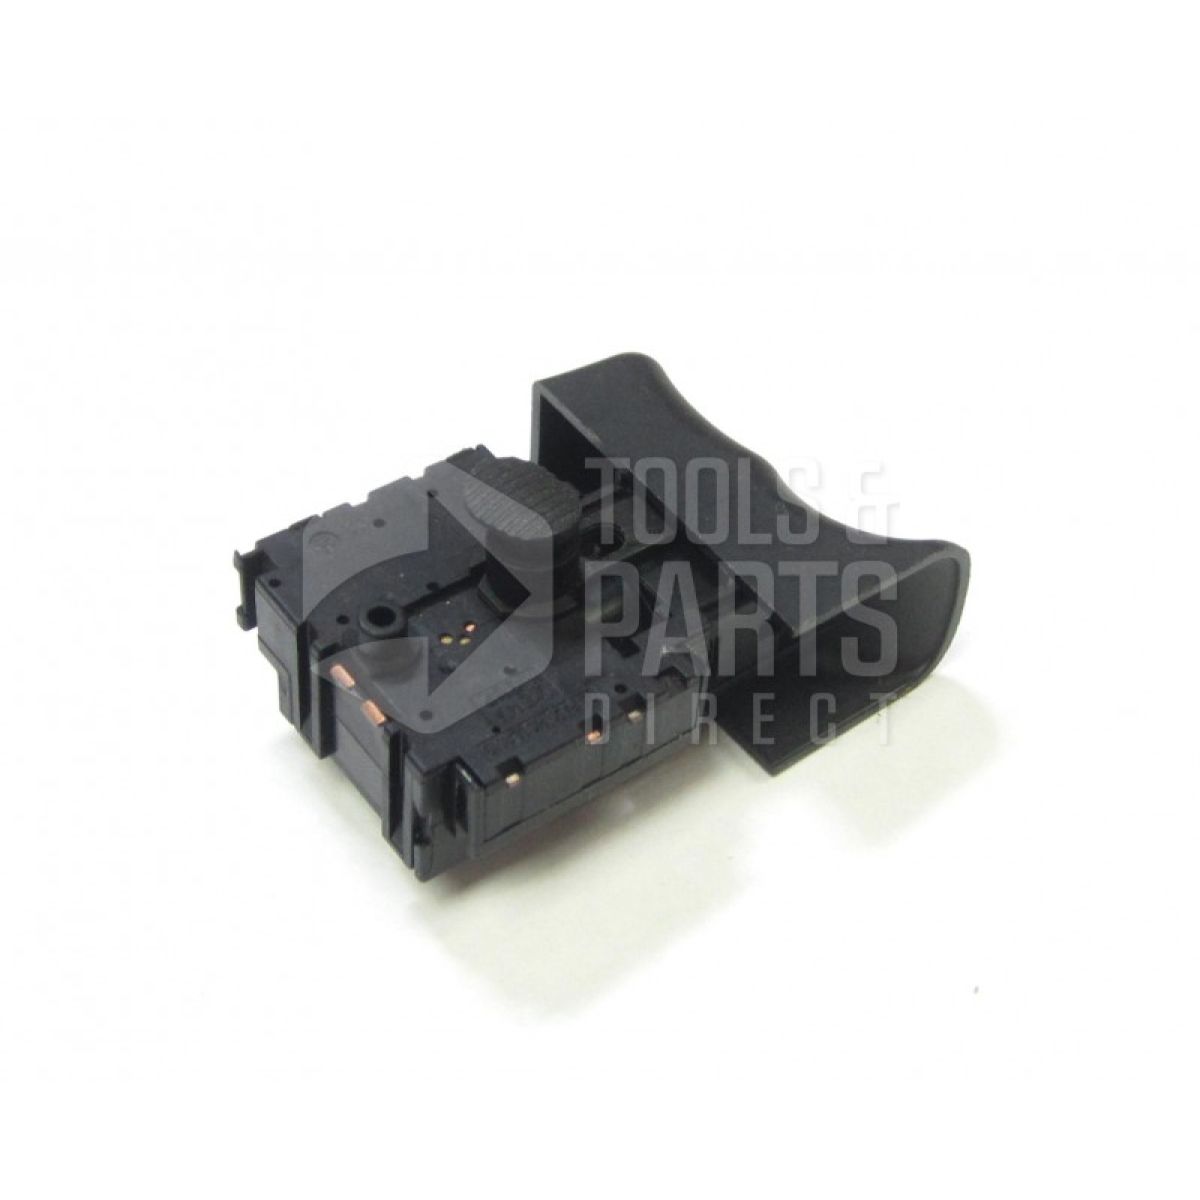 Black & Decker KD350RE Type 1 Drill Spare Parts - Part Shop Direct